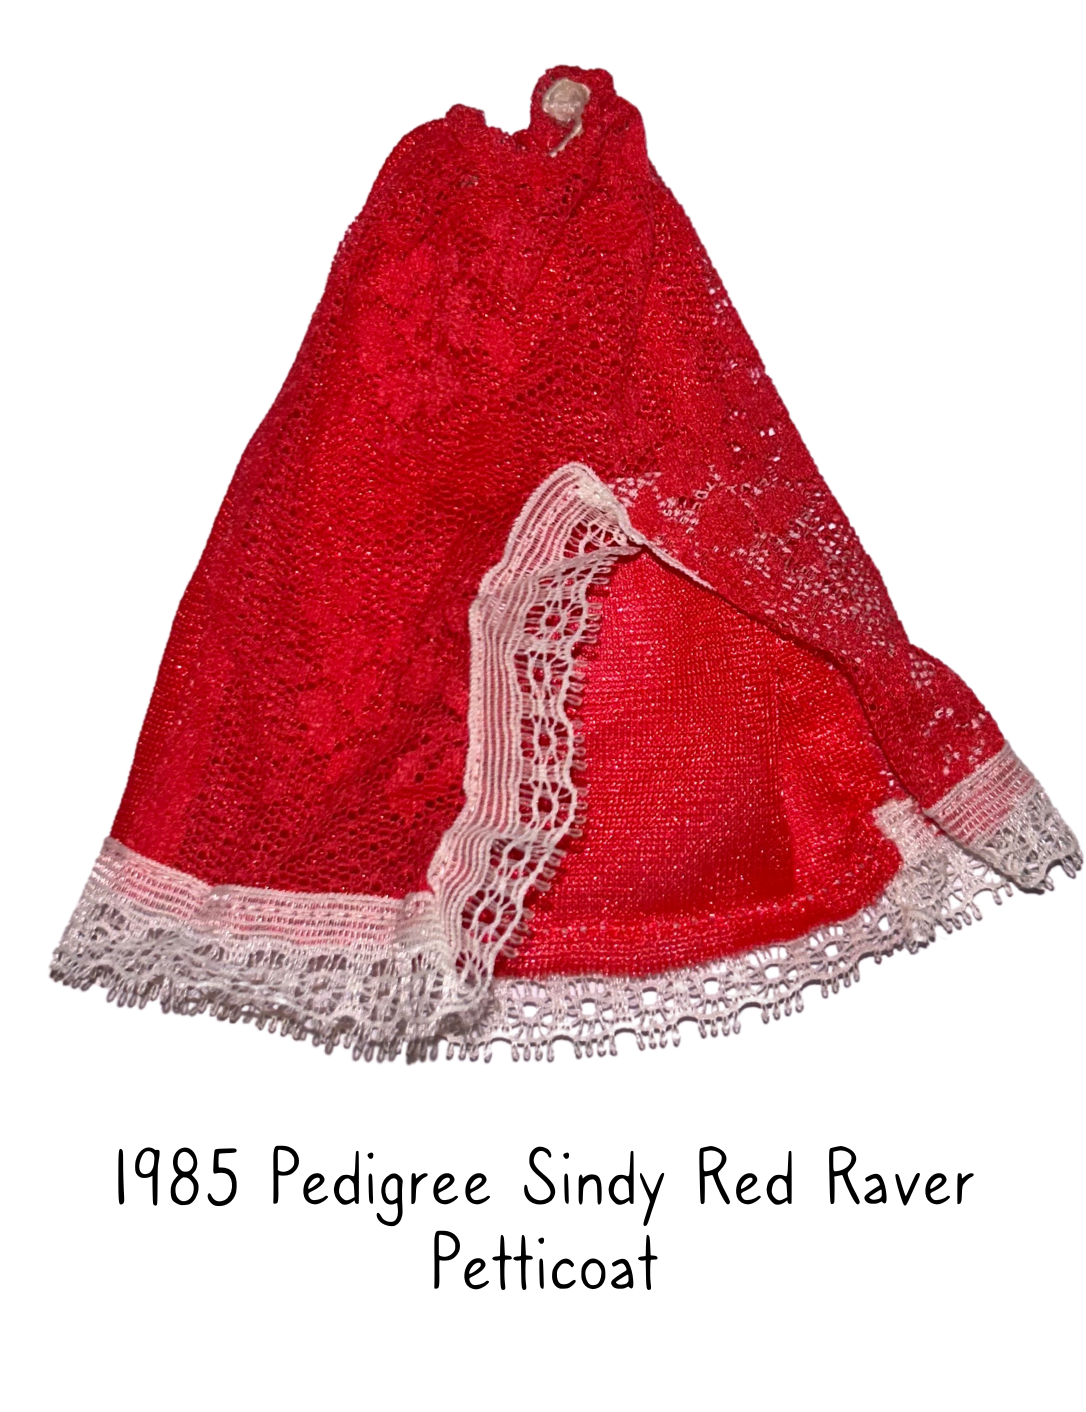 1985 Pedigree Sindy Red Raver Lingerie Petticoat